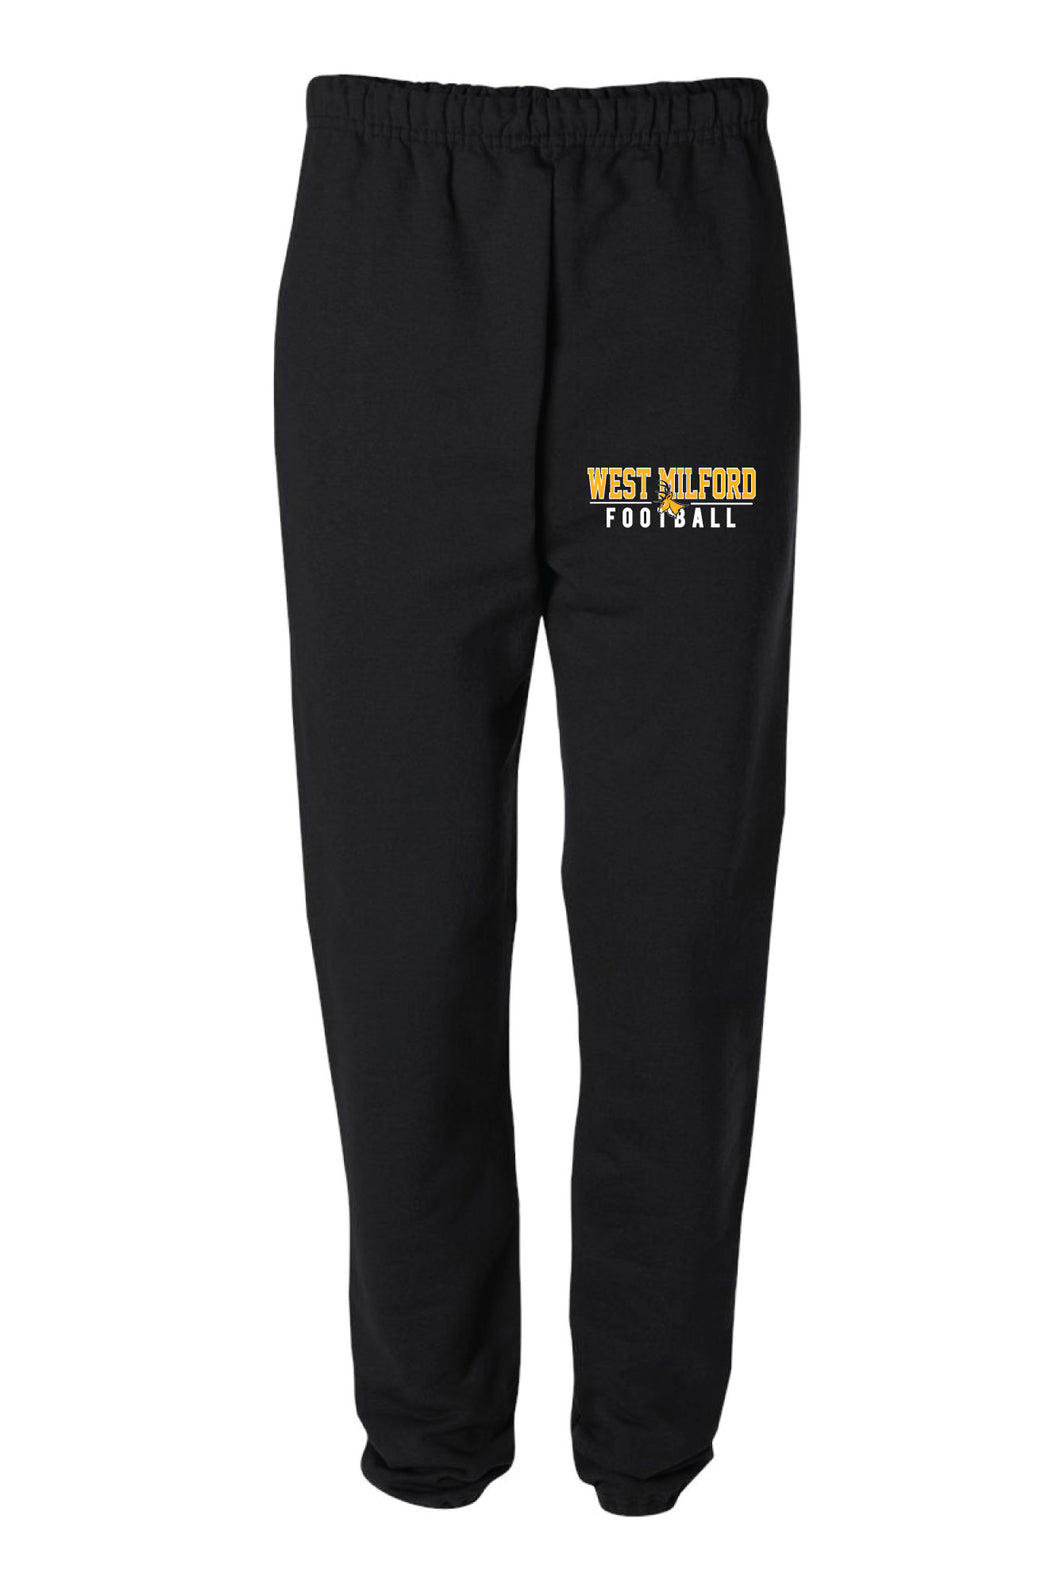 West Milford Highlanders Football Cotton Sweatpants - Black